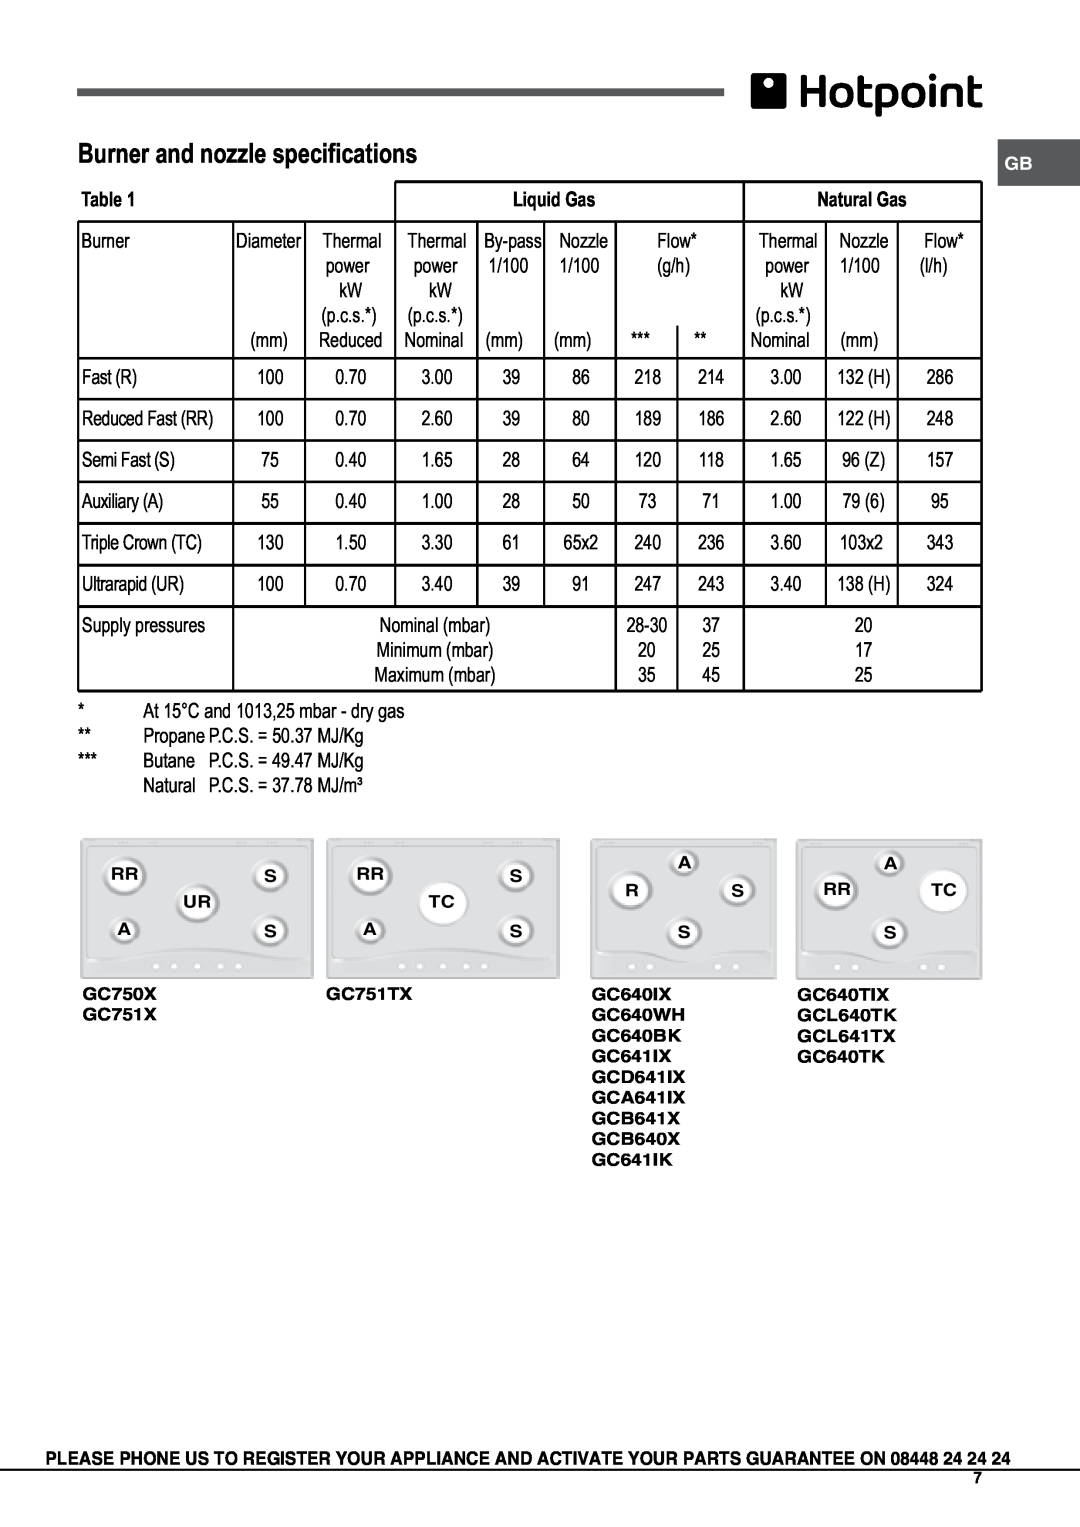 Hotpoint GC640BK, GC640WH, GC640IX, GC750X, GC751TX manual Burner and nozzle specifications, Liquid Gas 